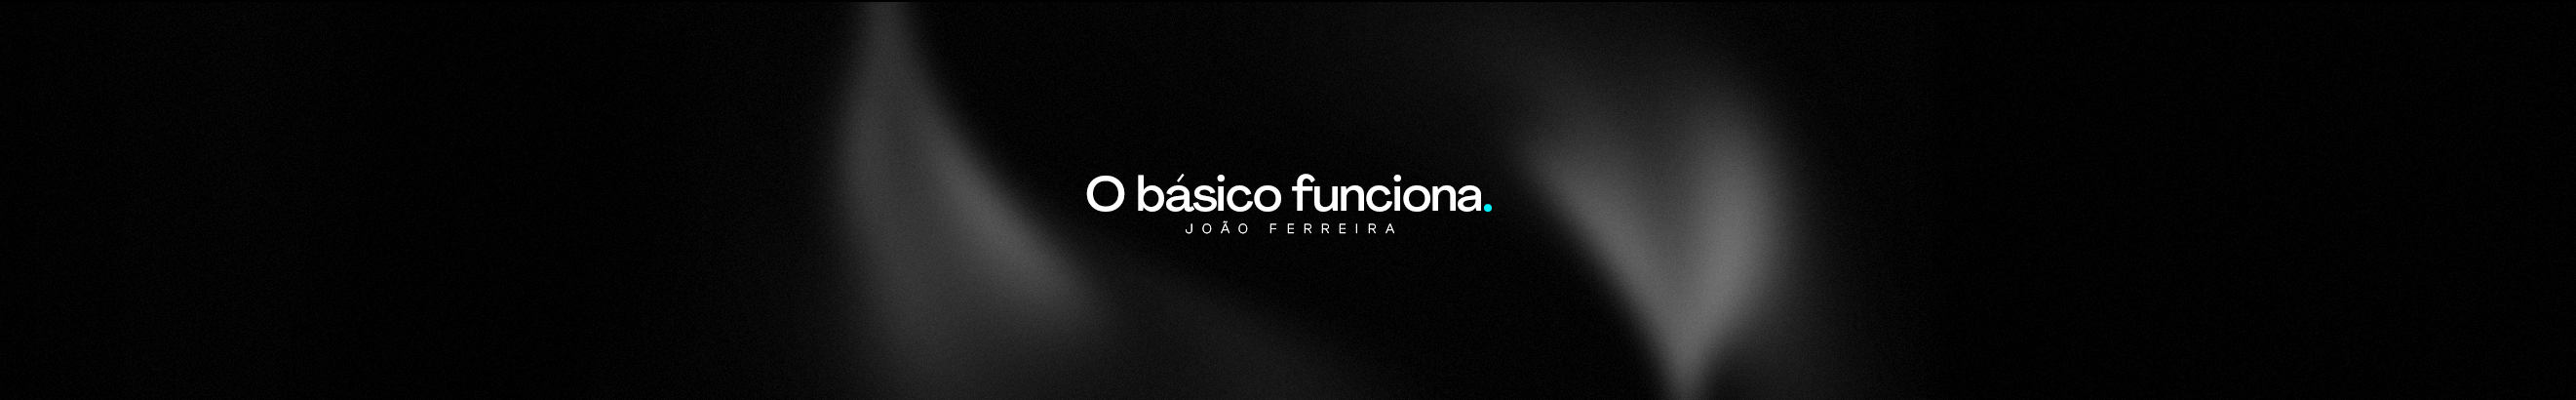 João Ferreira's profile banner